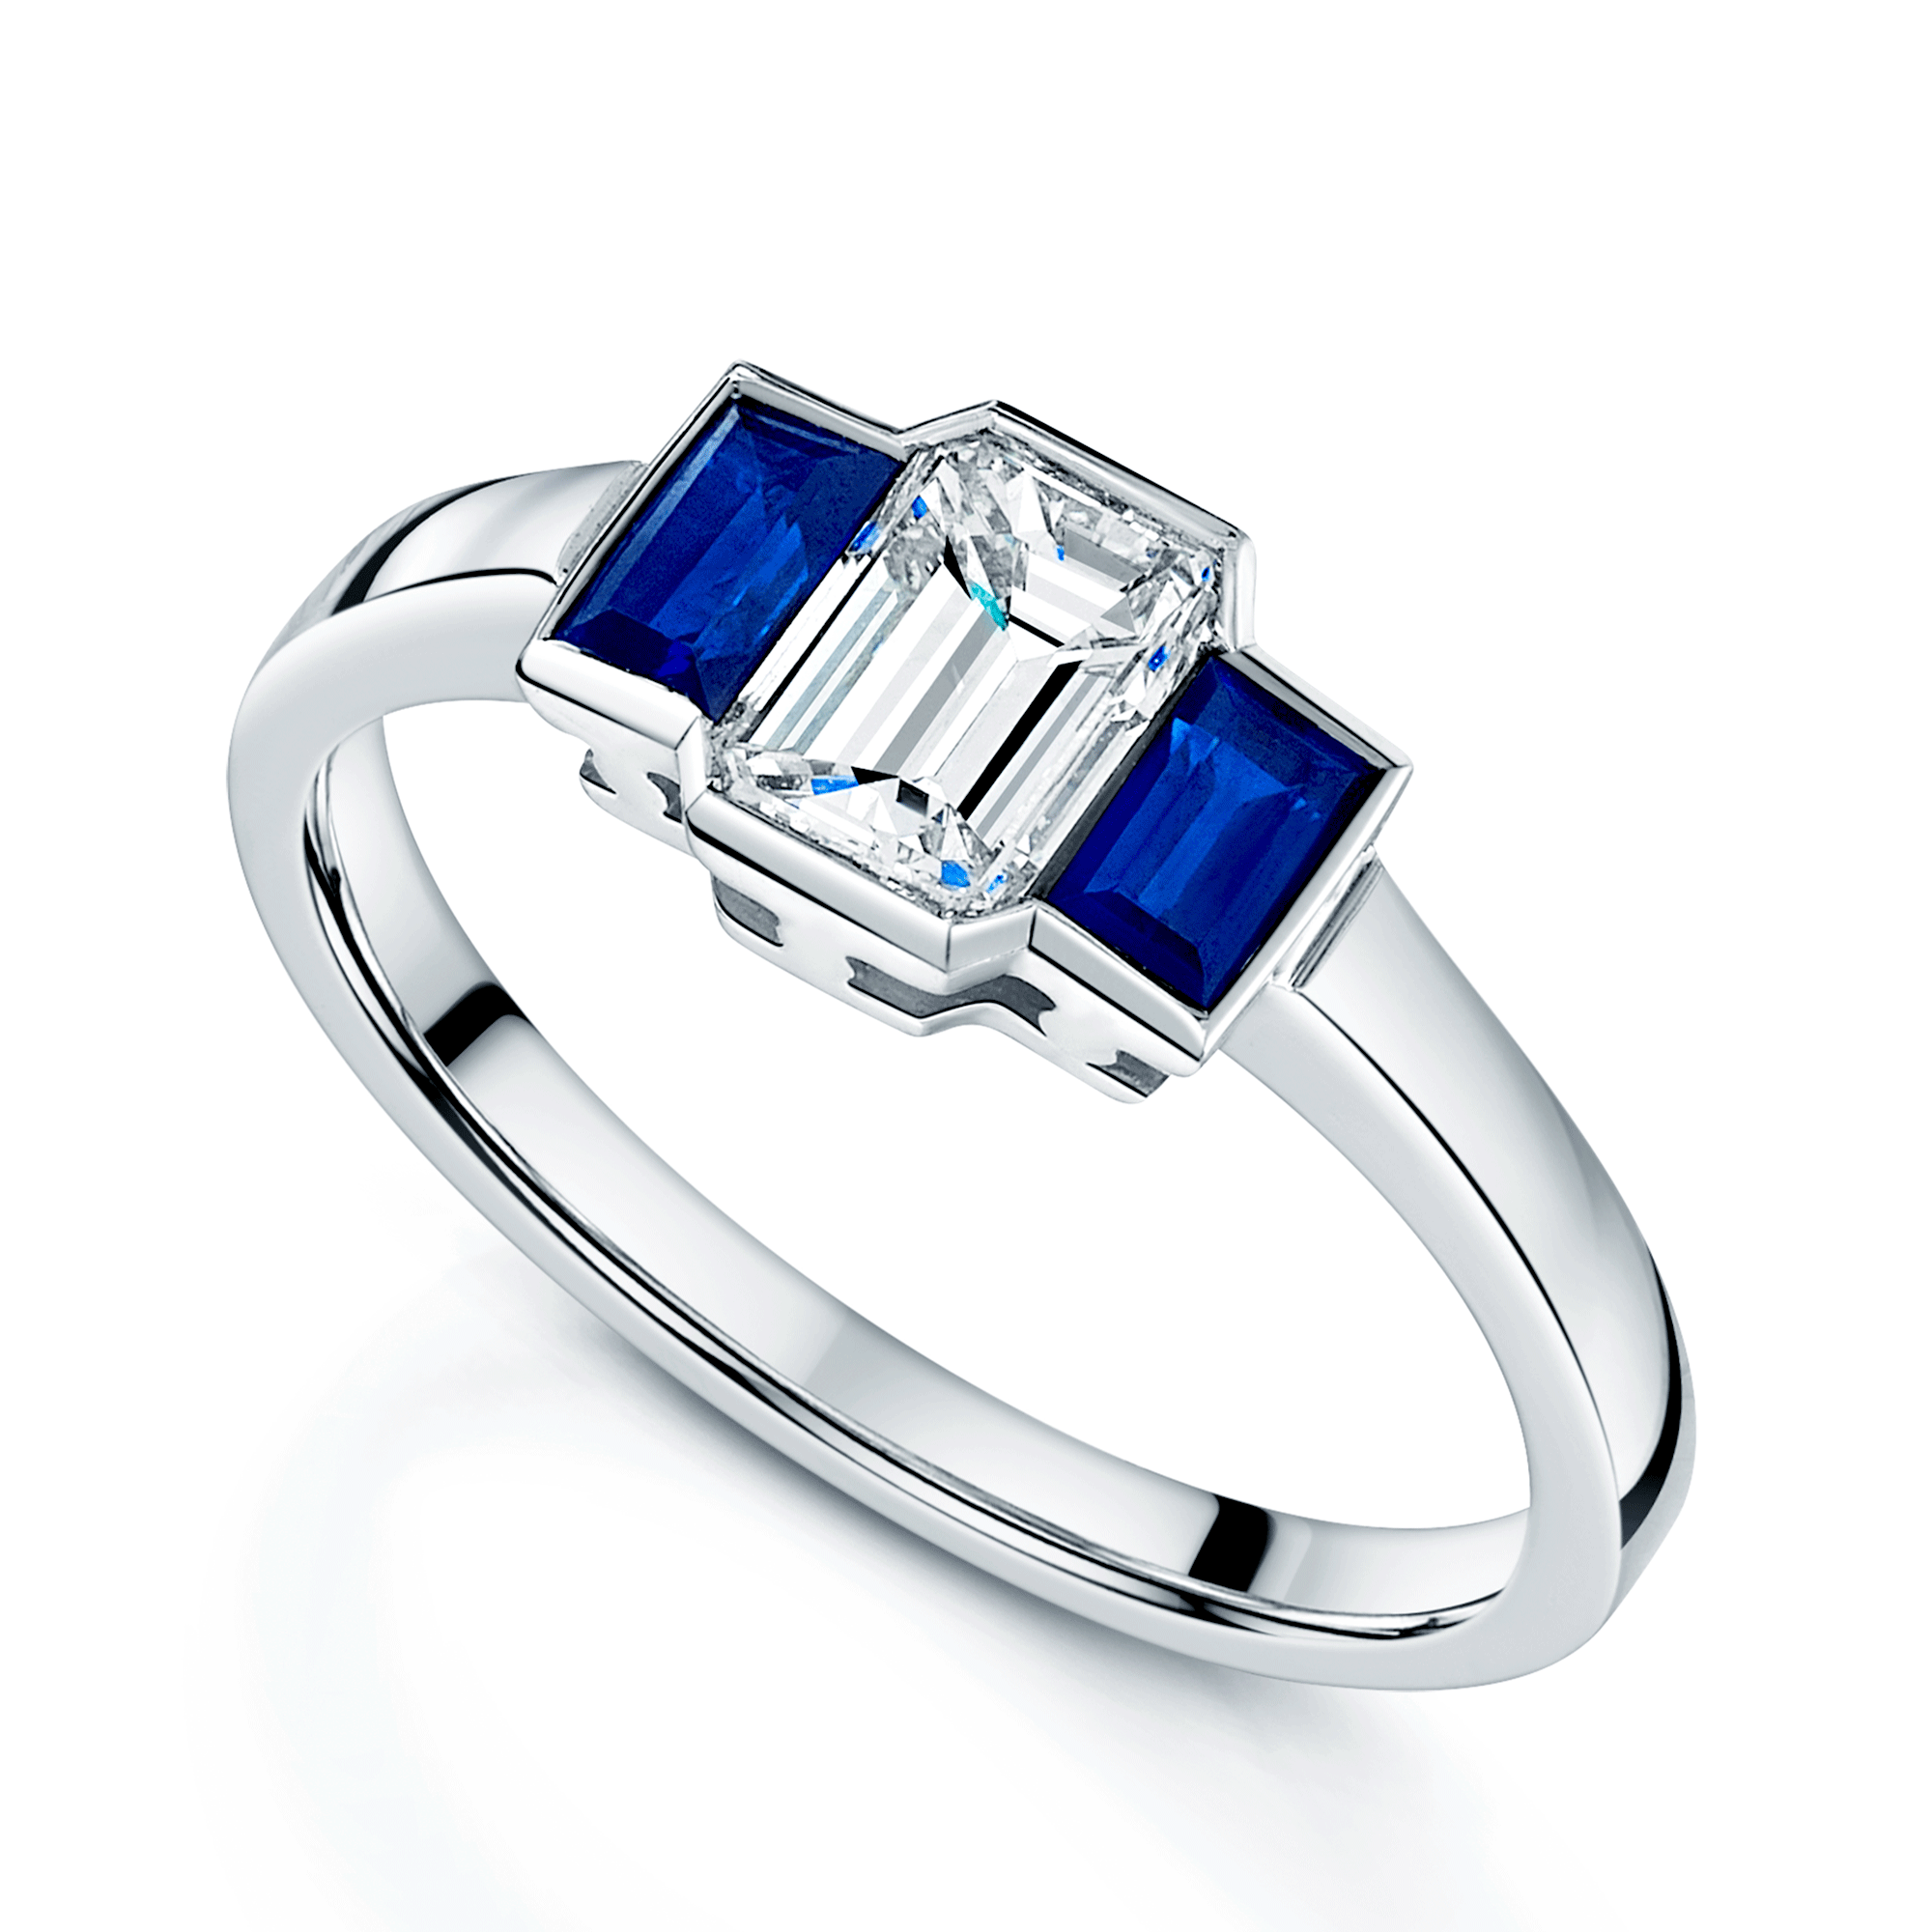 18ct White Gold Emerald Cut Diamond And Sapphire Three Stone Ring